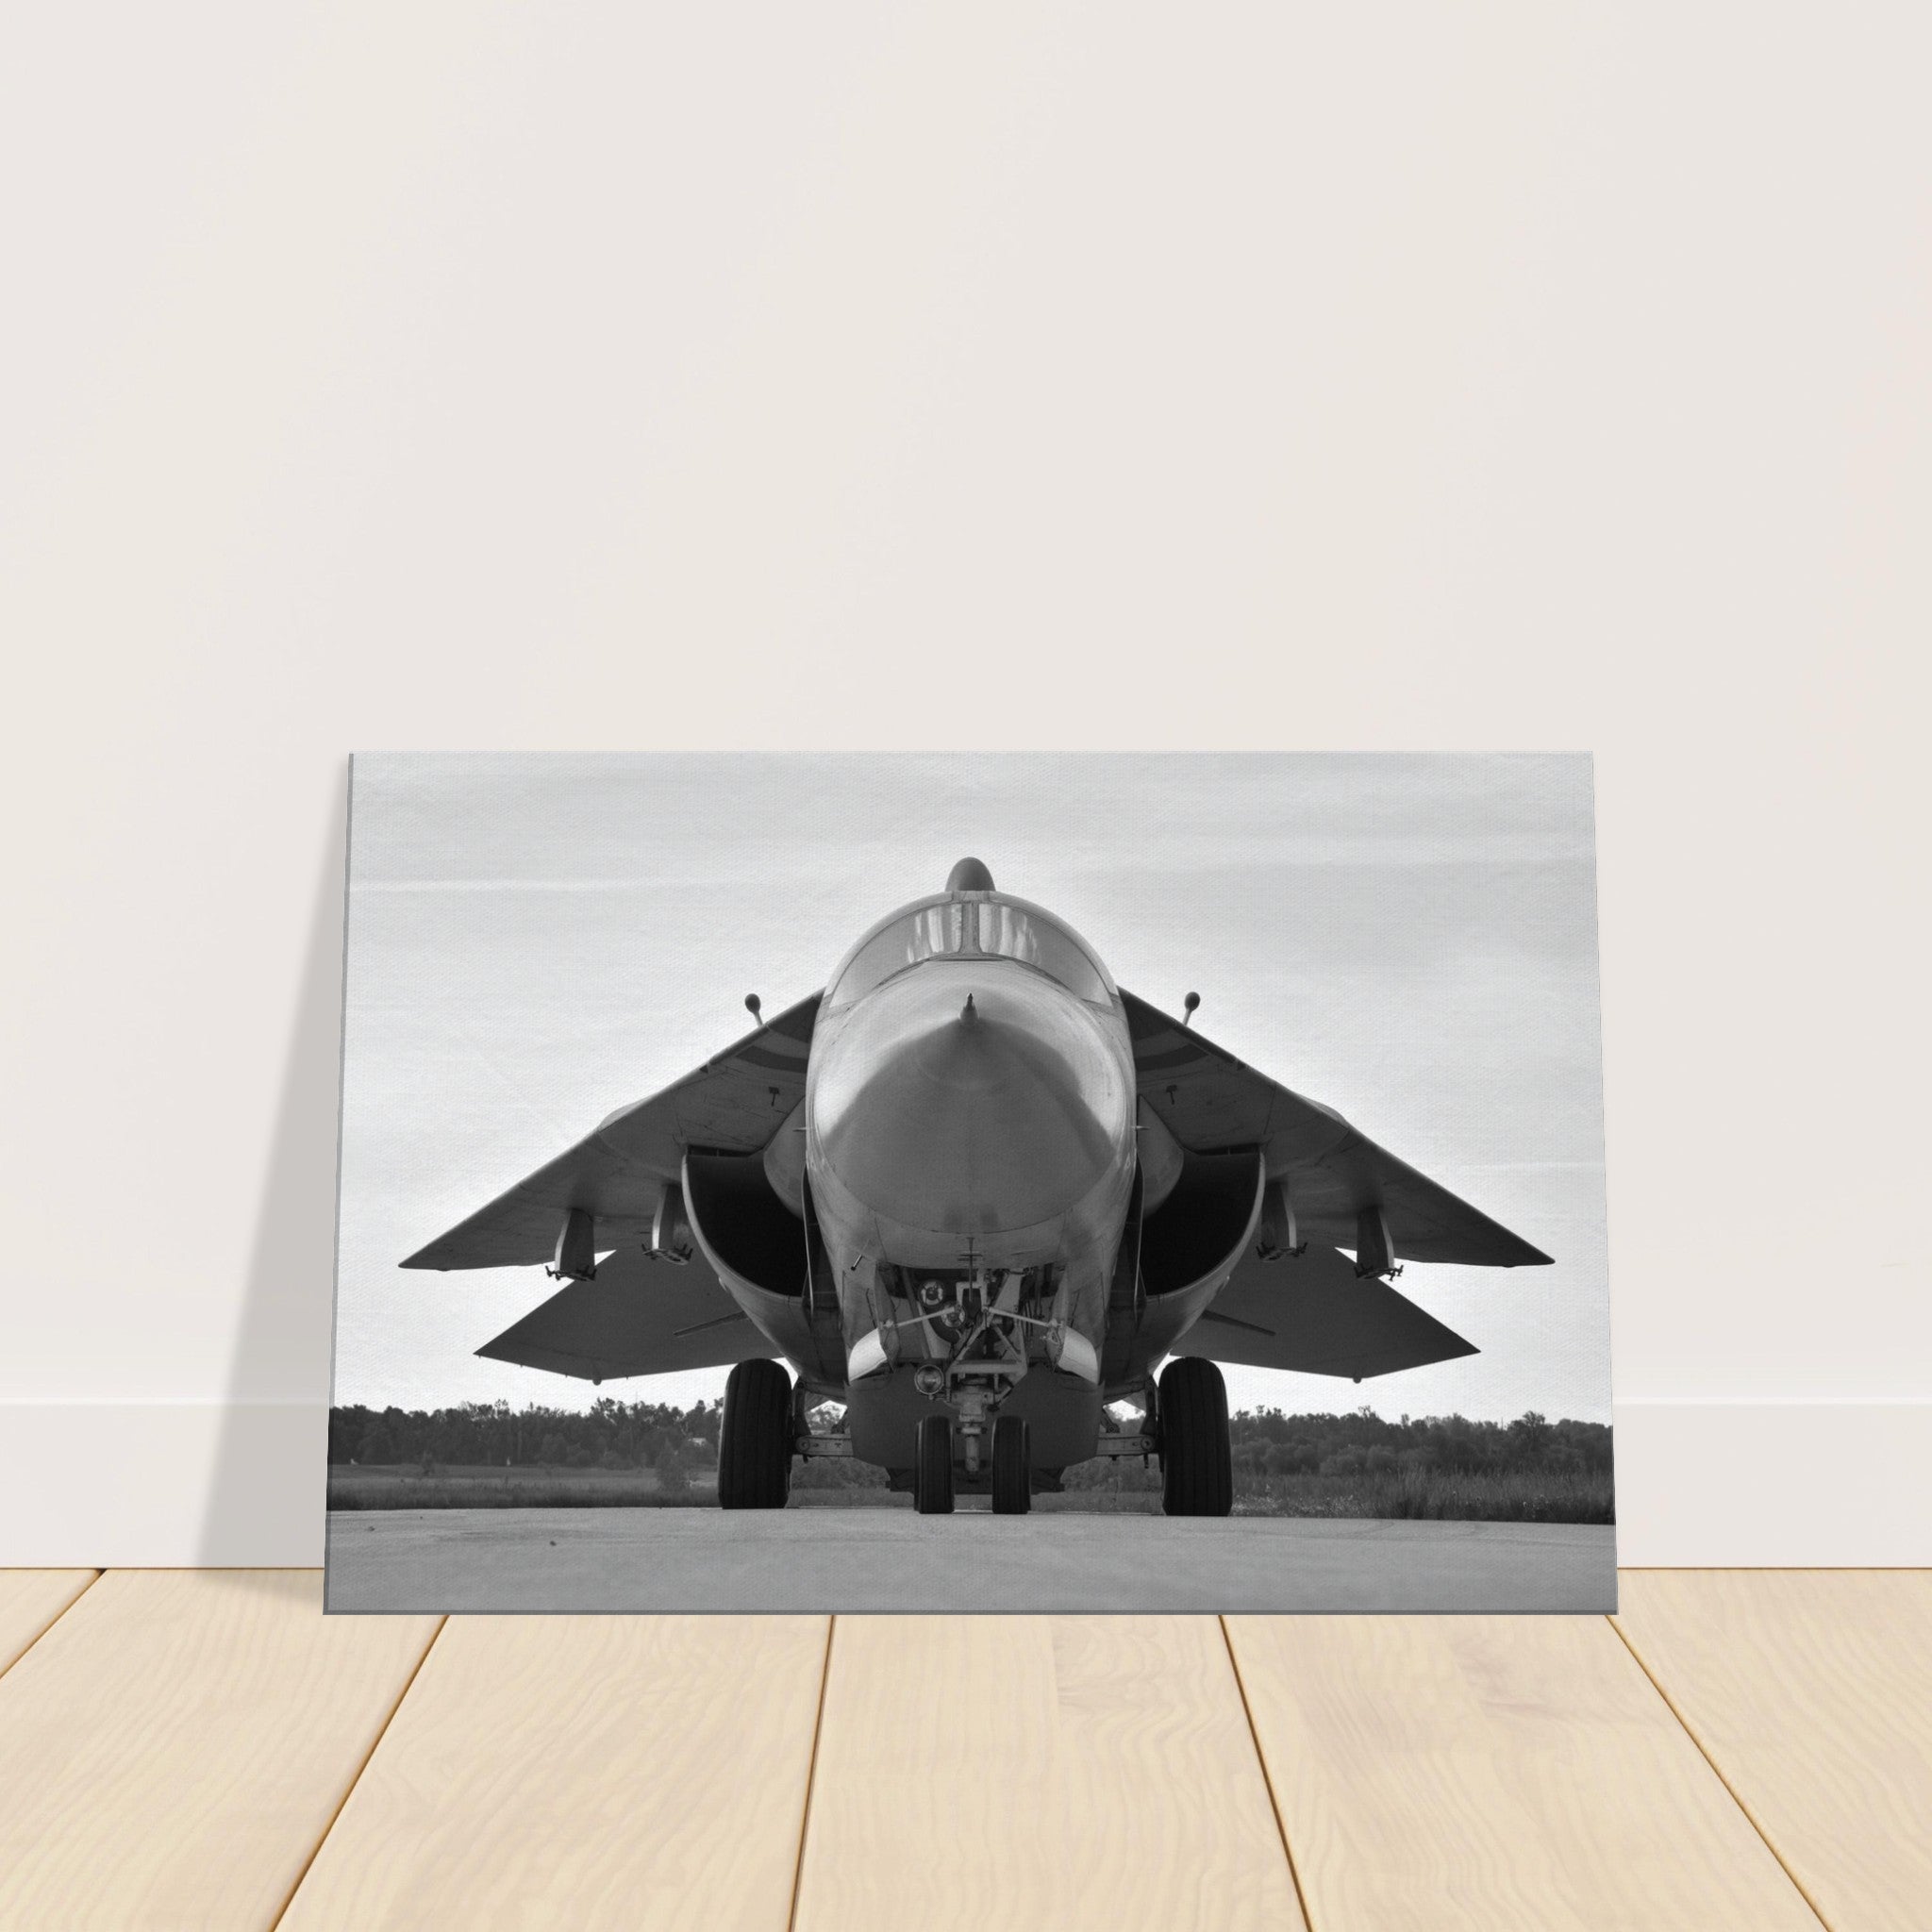 EF-111 "Raven" on Canvas - I Love a Hangar